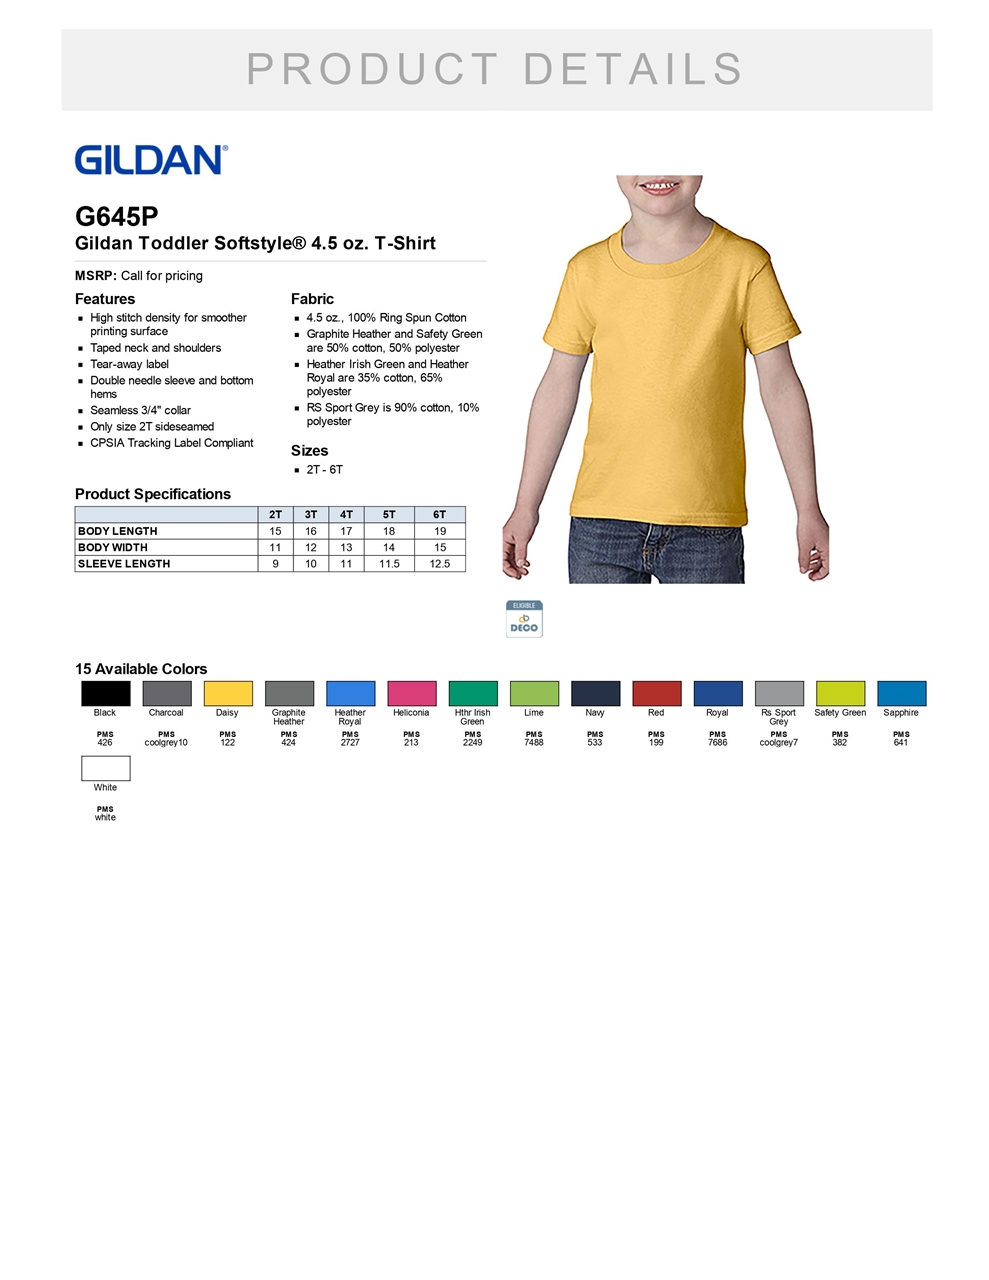 Store. Gildan Toddler Softstyle Toccoa T-Shirt